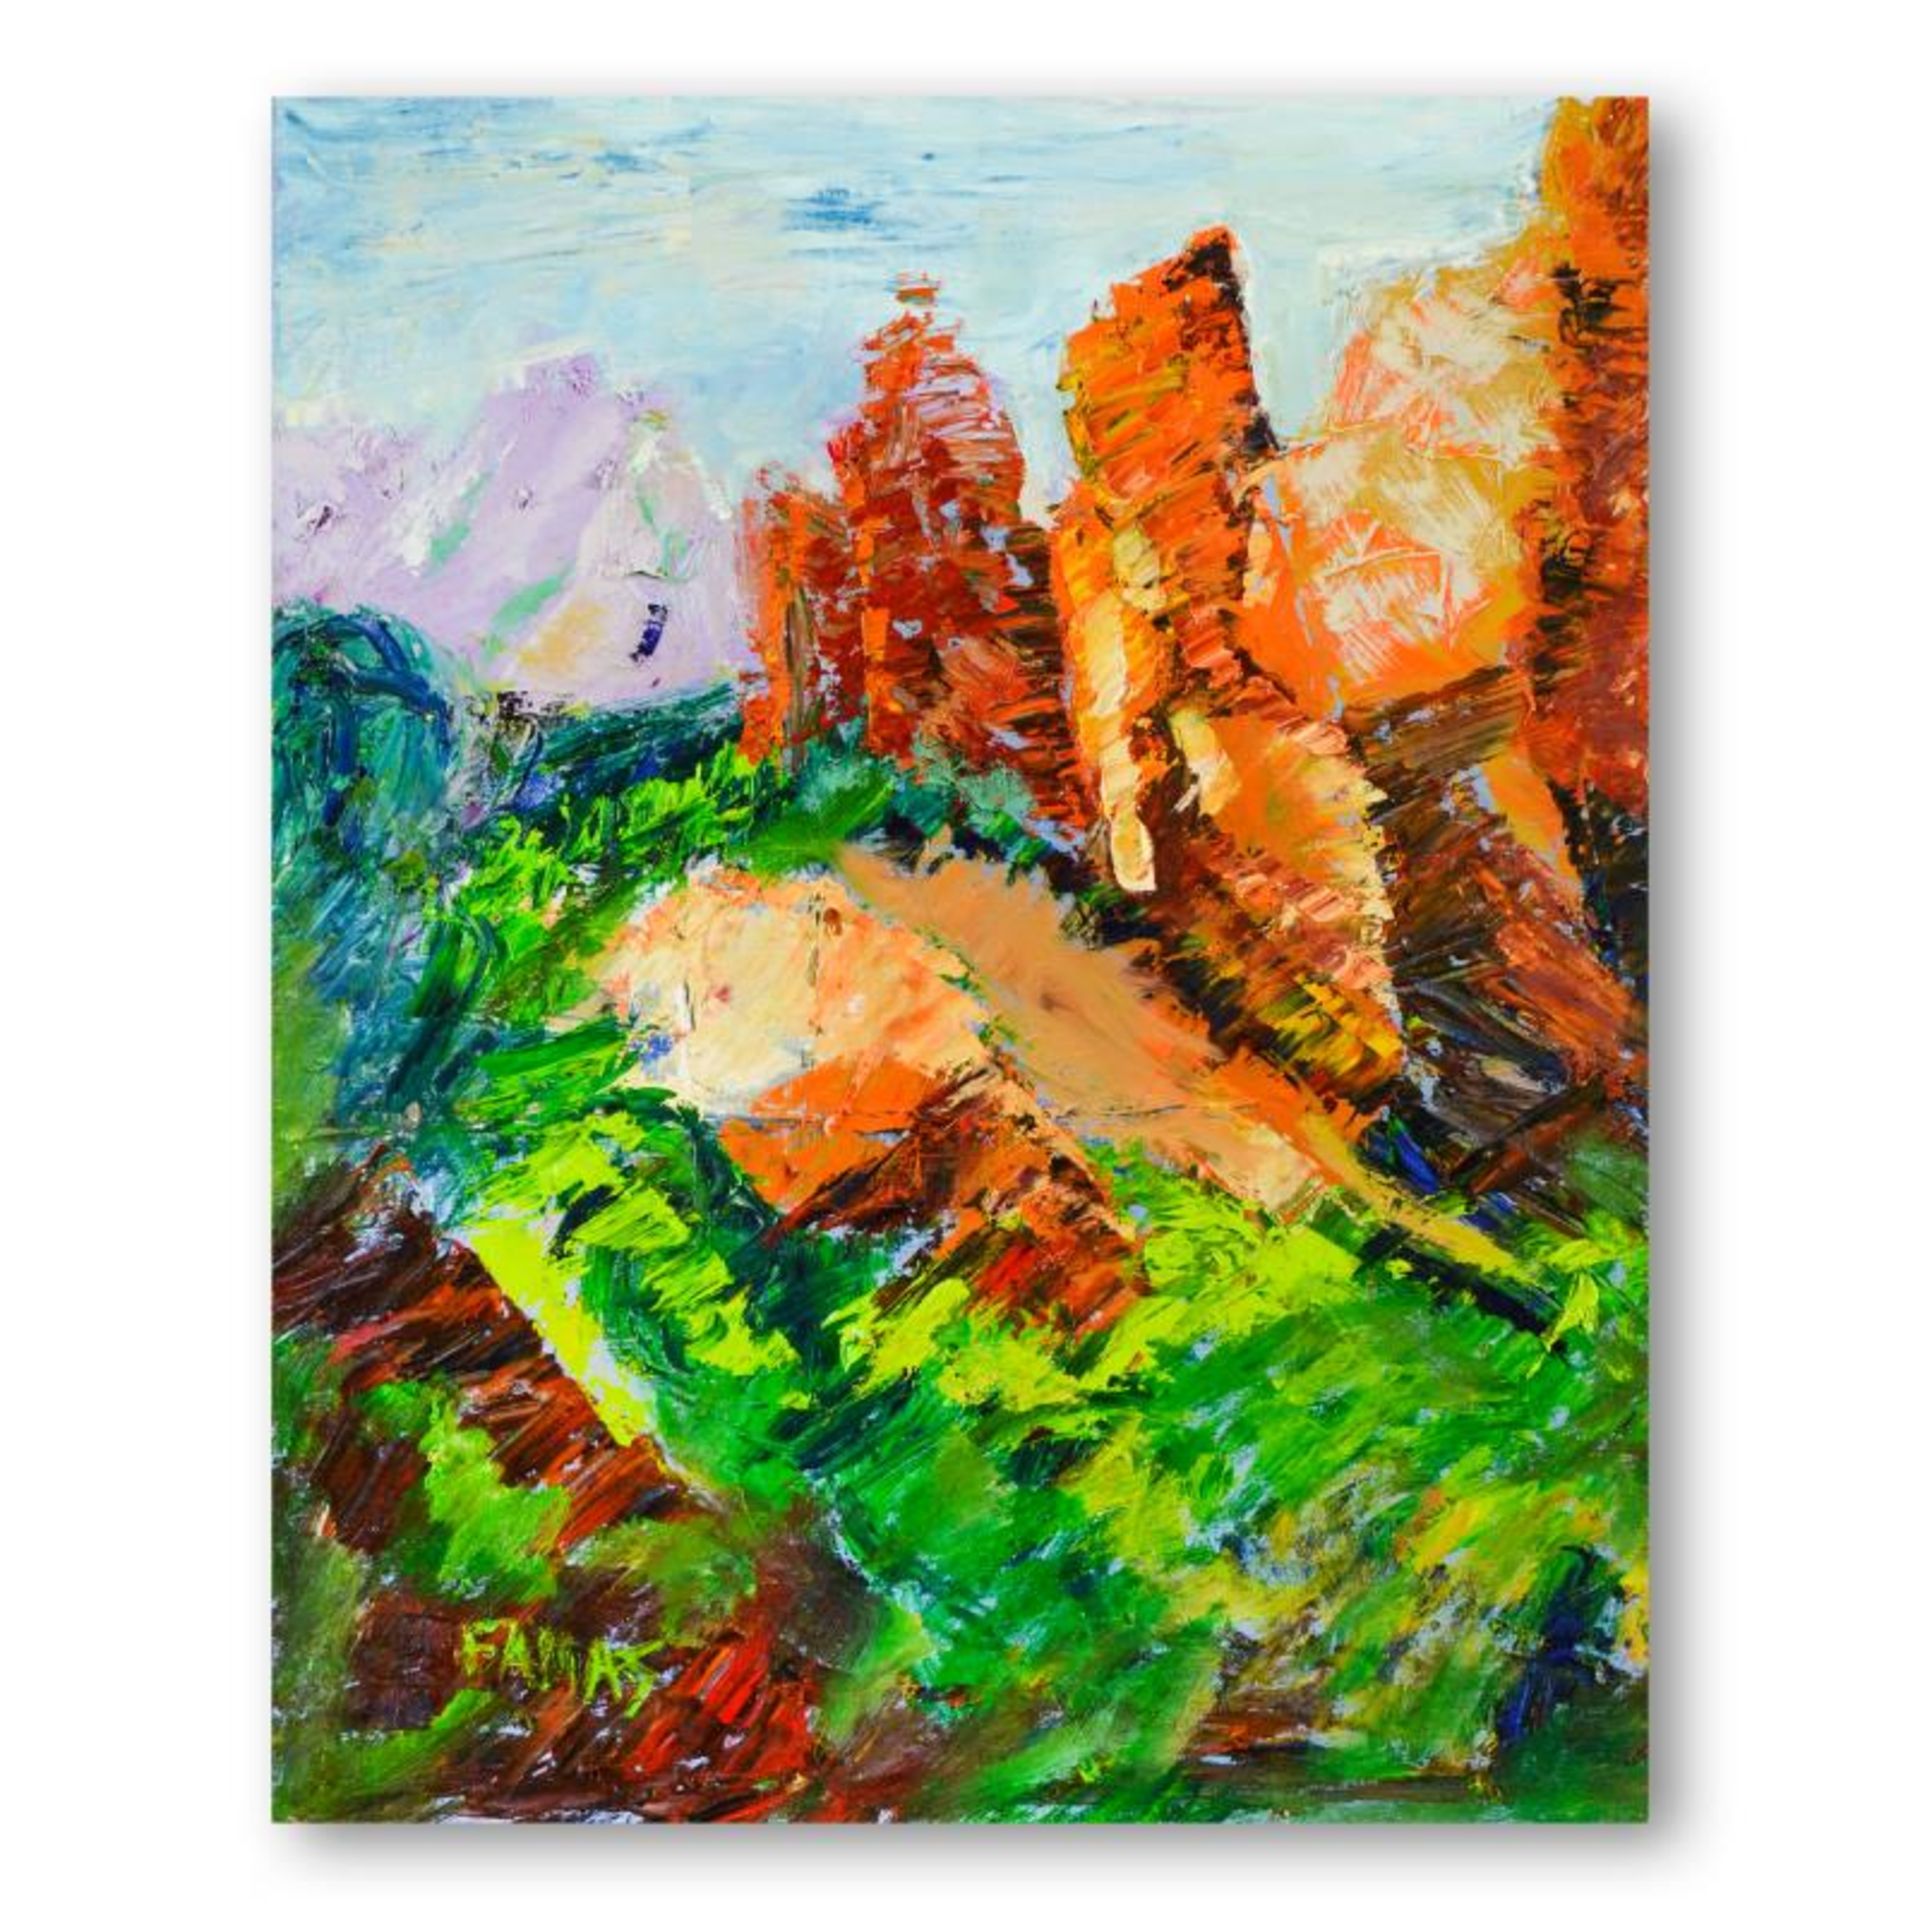 Elliot Fallas, "Rocky Mountain High" Original Oil Painting on Canvas, Hand Signe